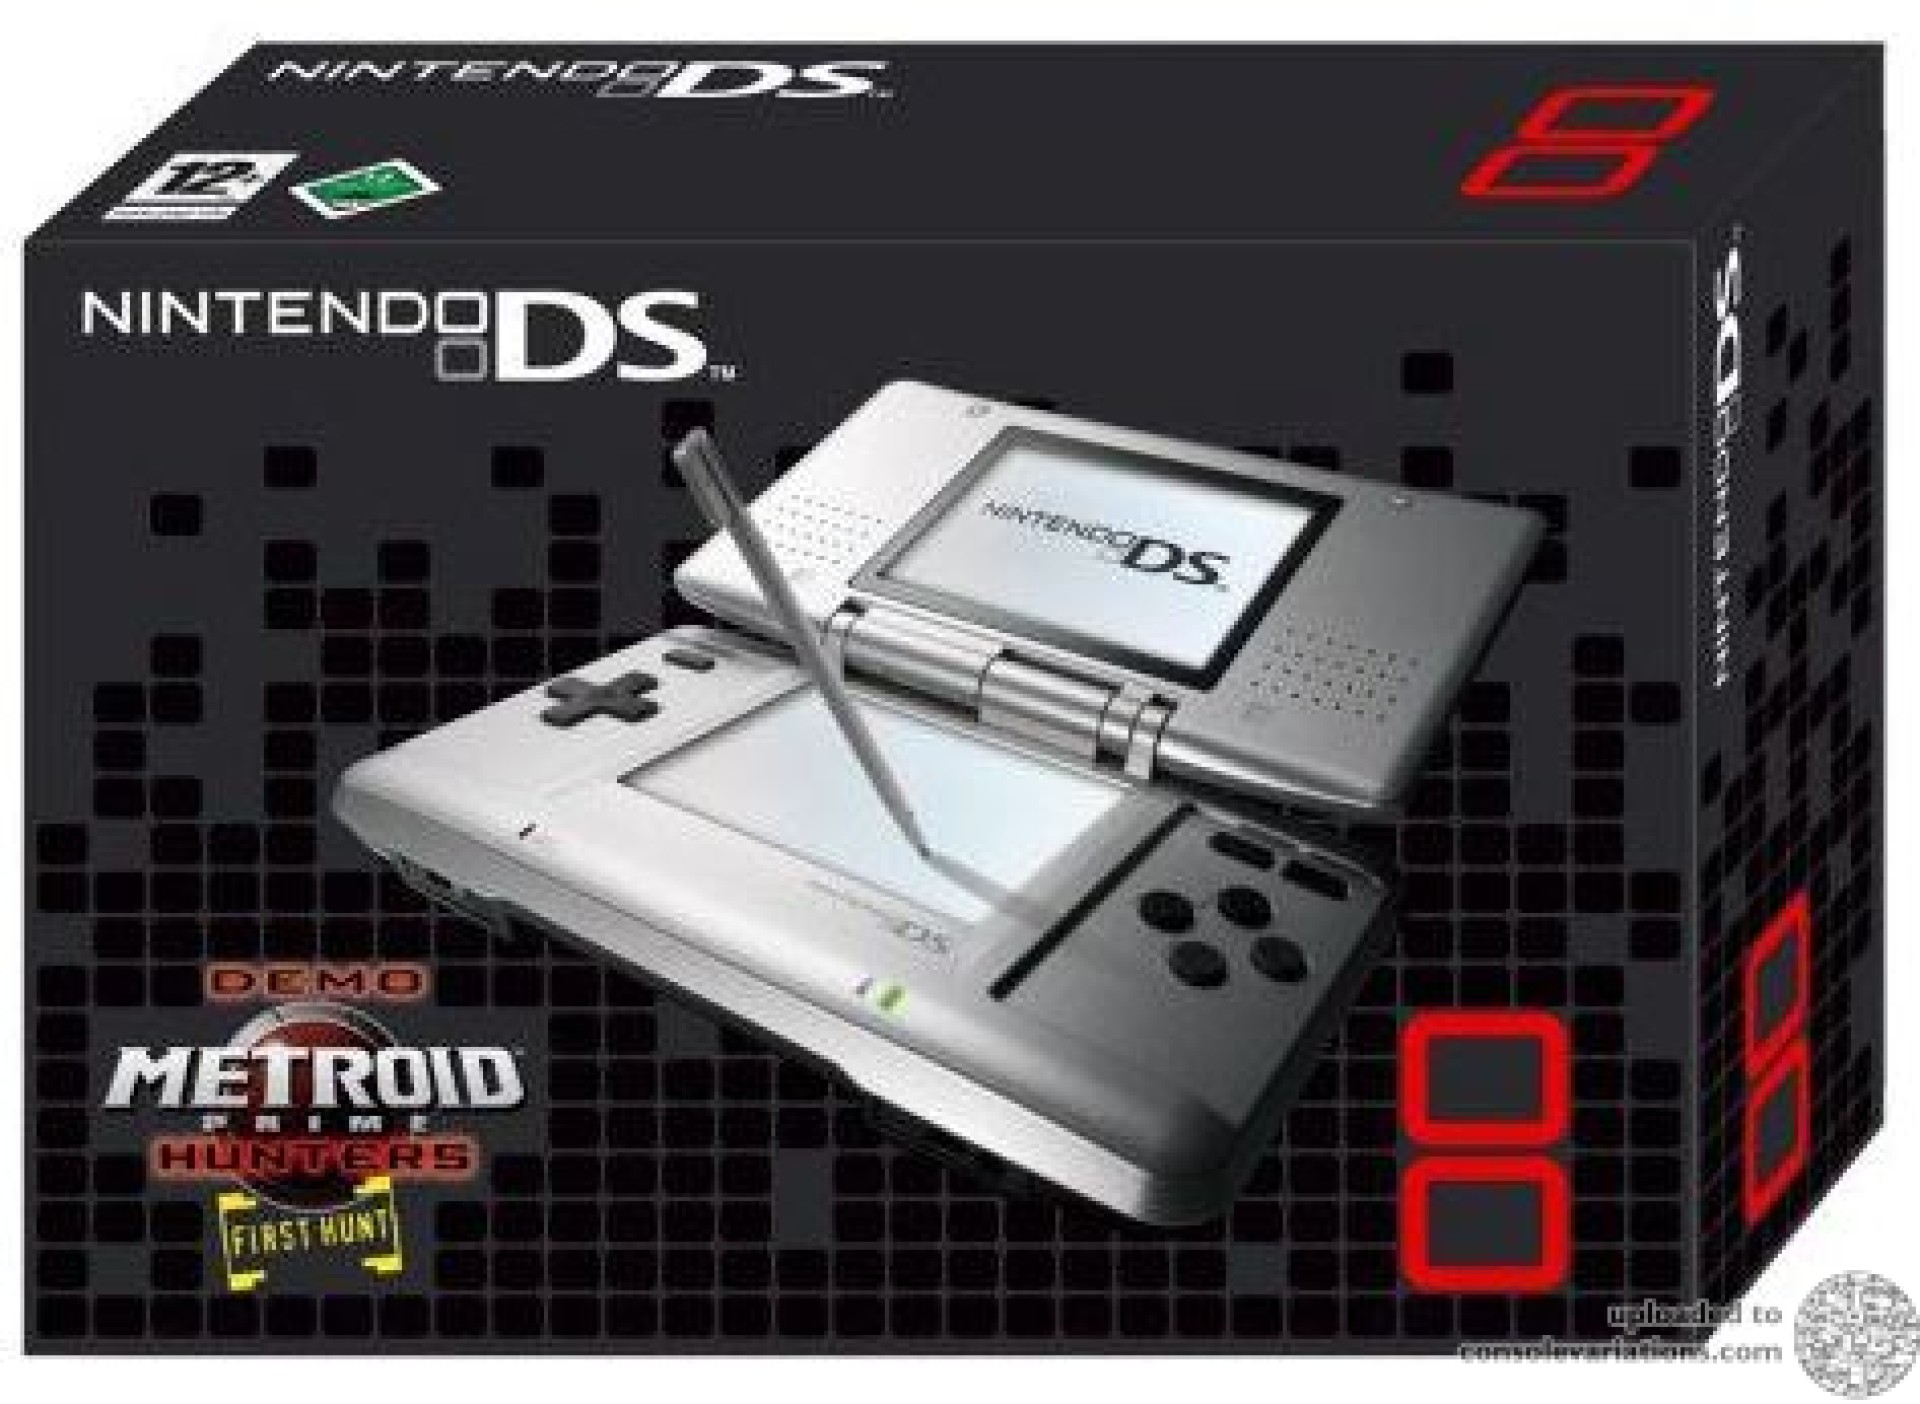 Nintendo DS Metroid Prime Hunters First Hunt Demo Edition (dobozos, pixelcsíkos kijelzőkkel) - Nintendo DS Gépek